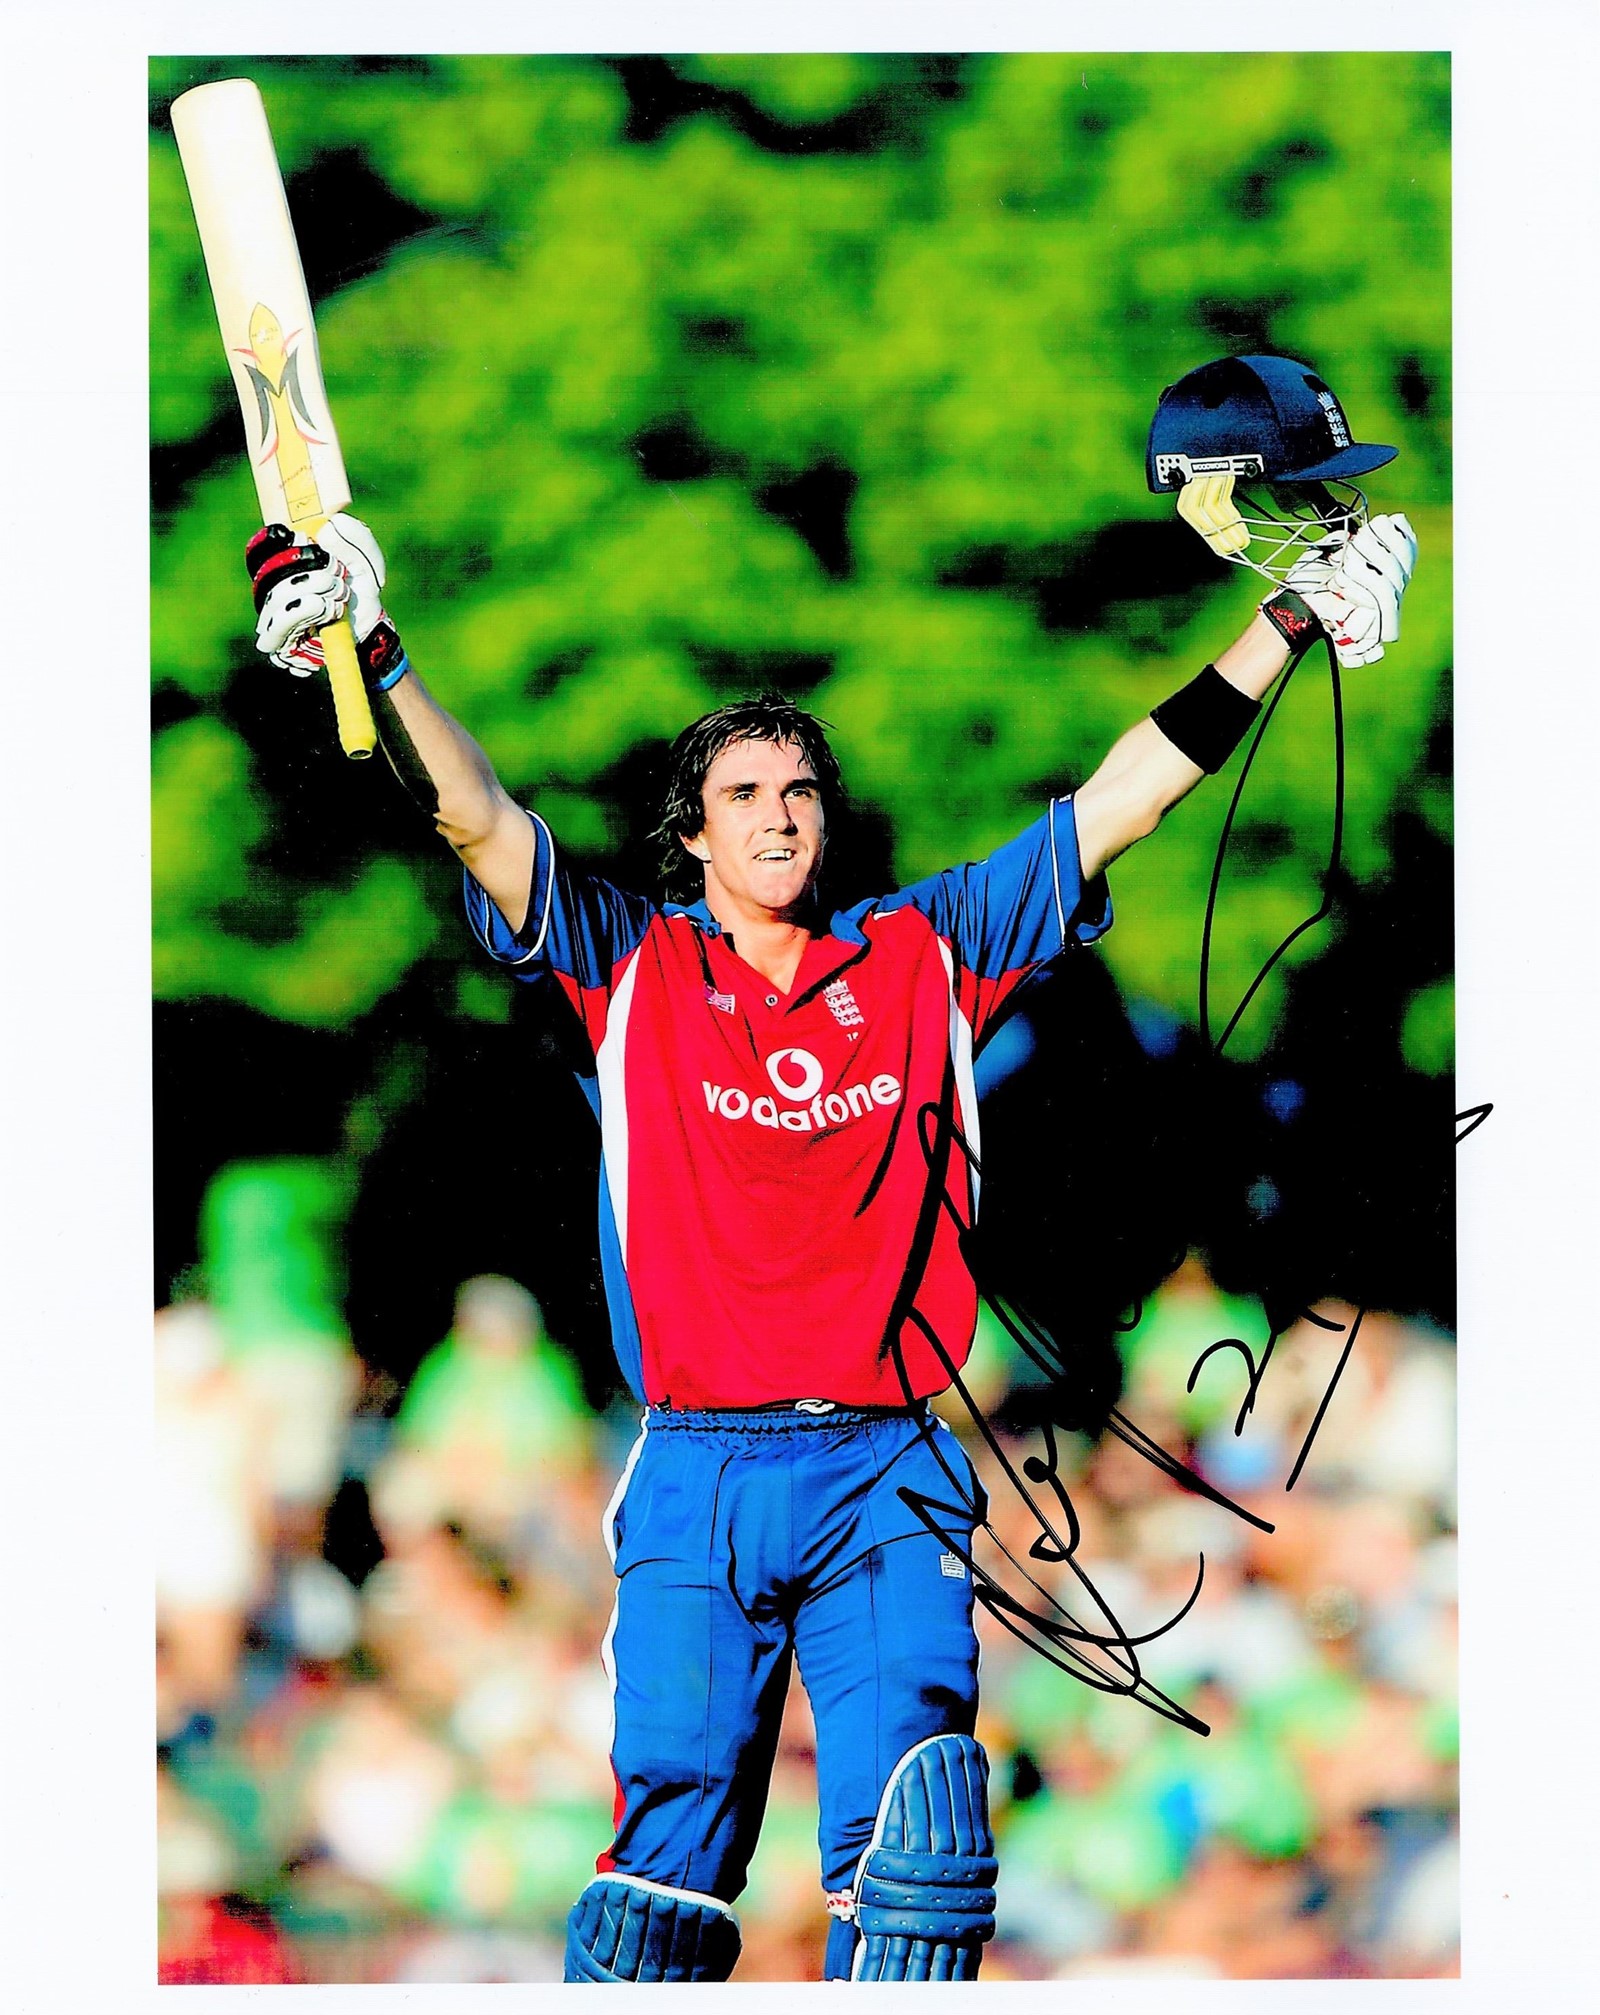 Cricket Kevin Pietersen signed England 10x8 colour photo. Kevin Peter Pietersen MBE (born 27 June